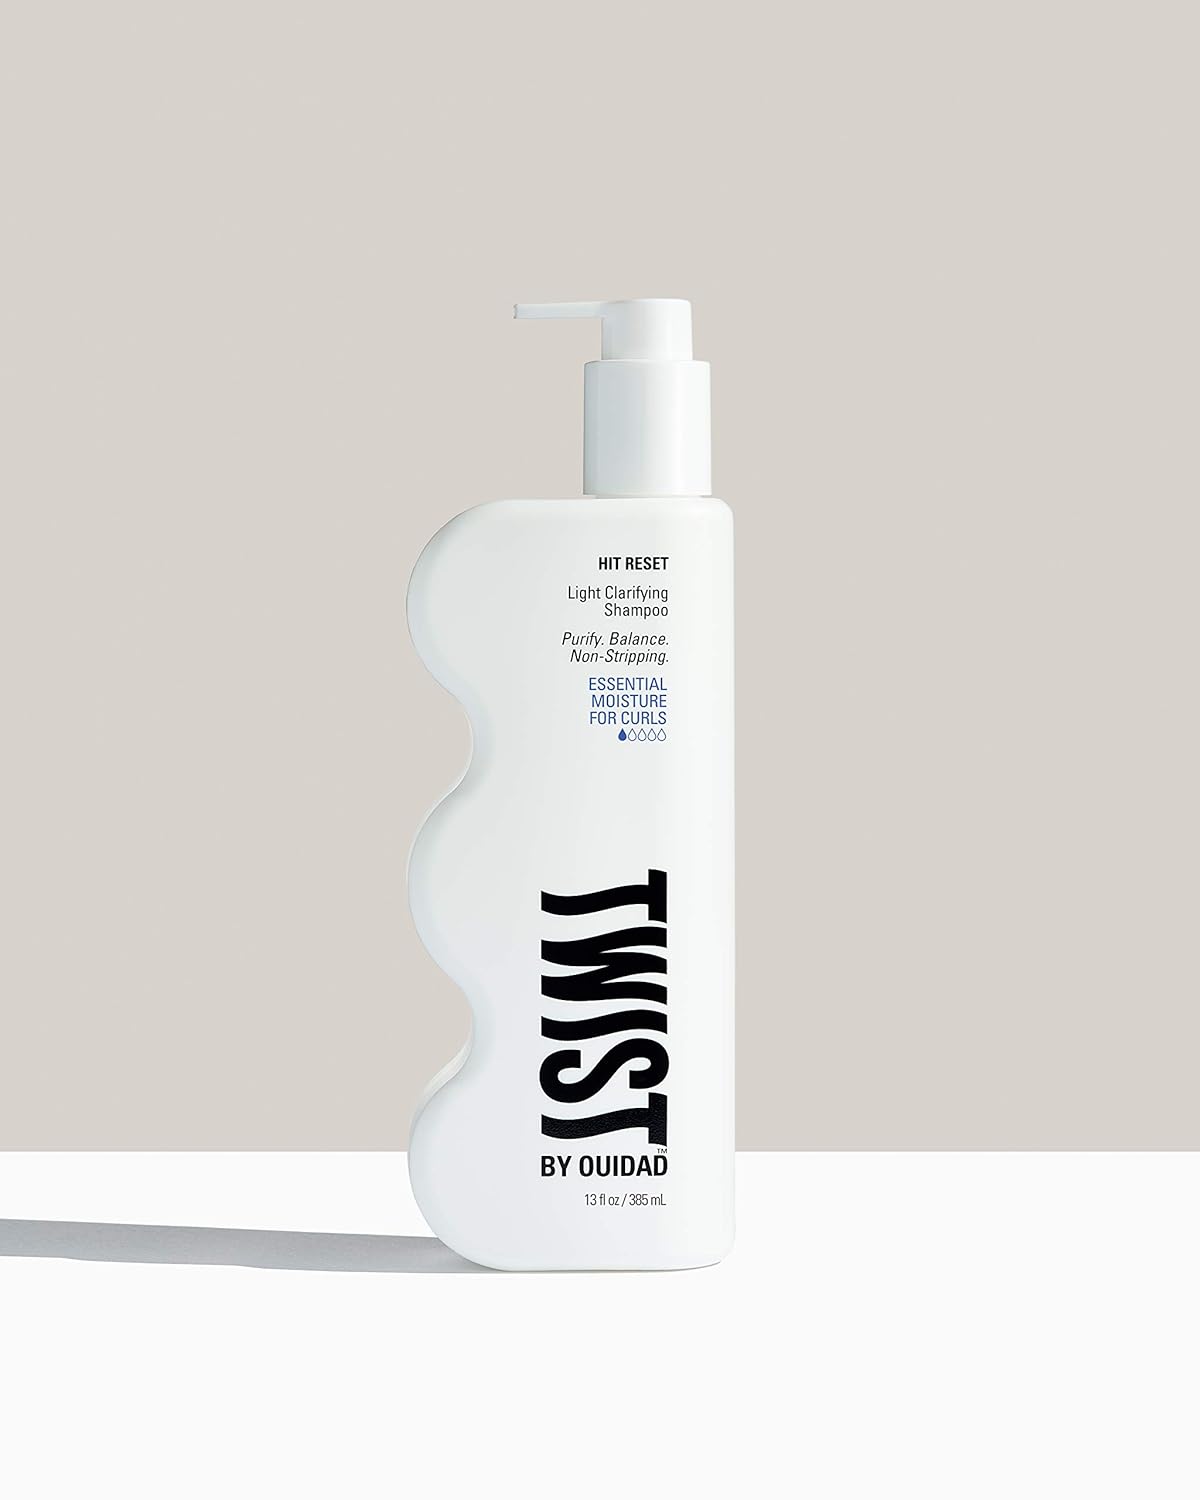 TWIST Hit Reset Light Clarifying Shampoo, 13 ounces : Beauty & Personal Care